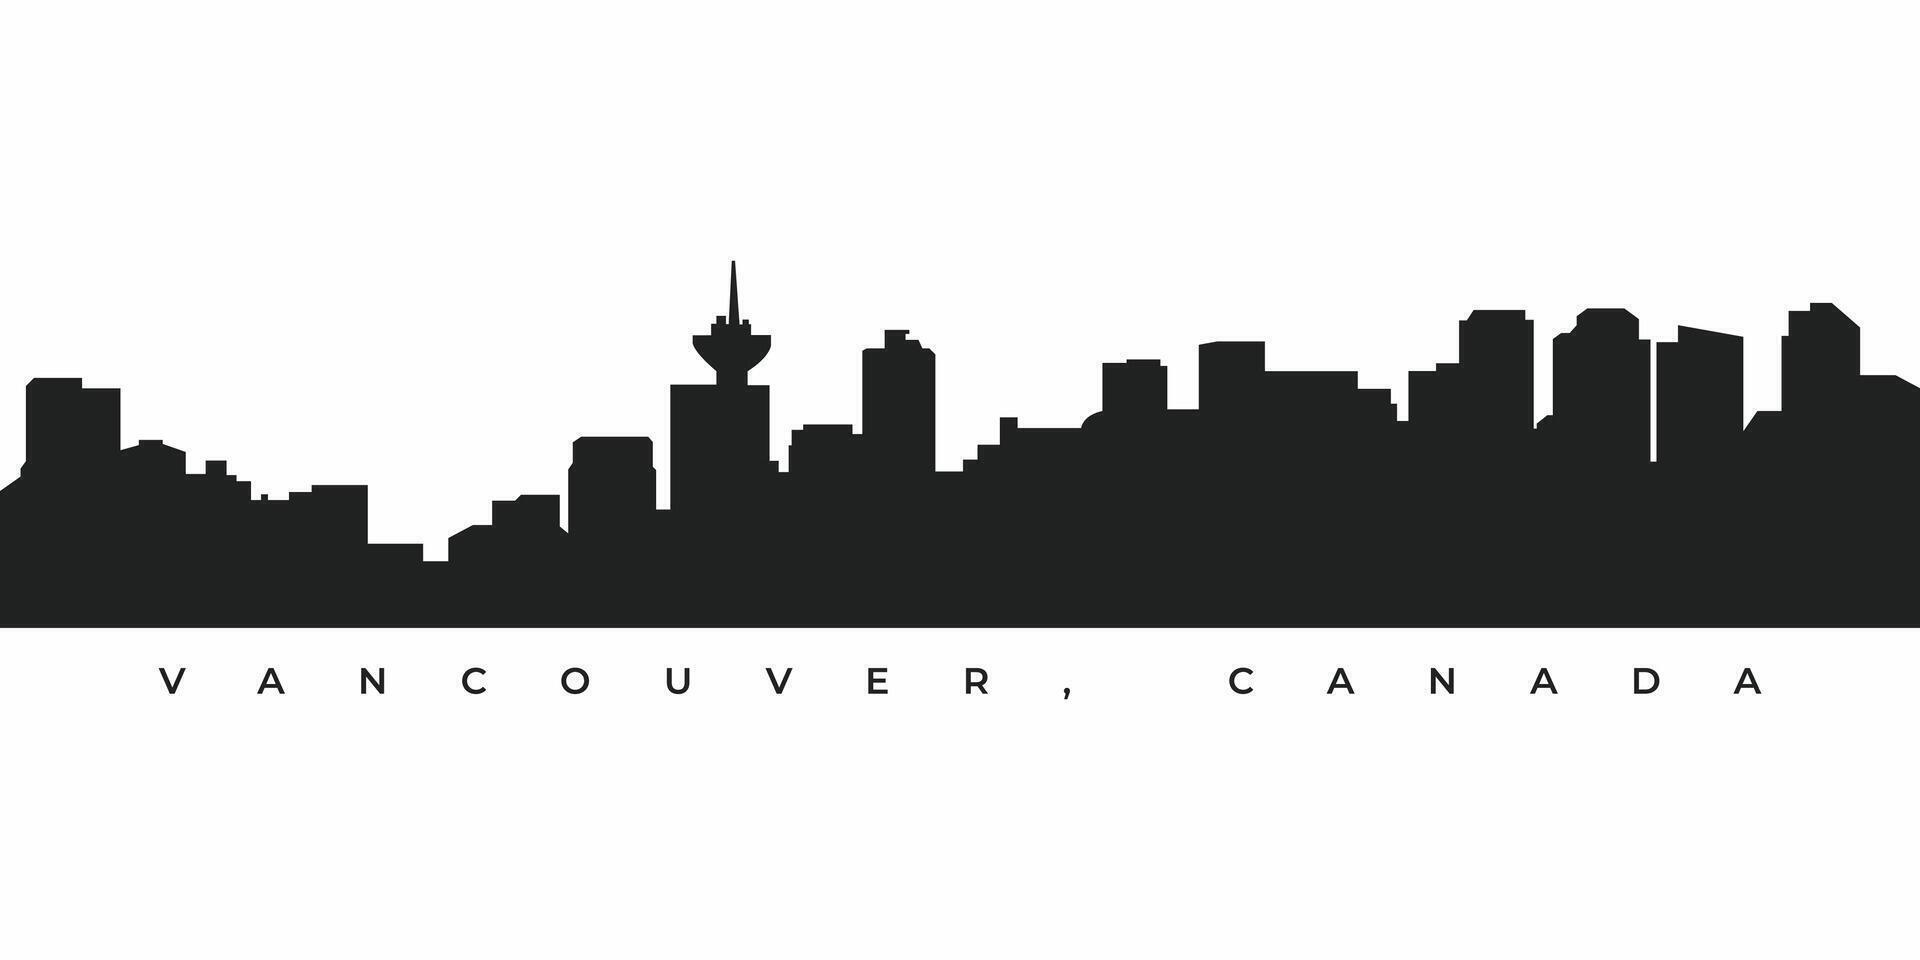 vancouver, canada skyline vector illustration